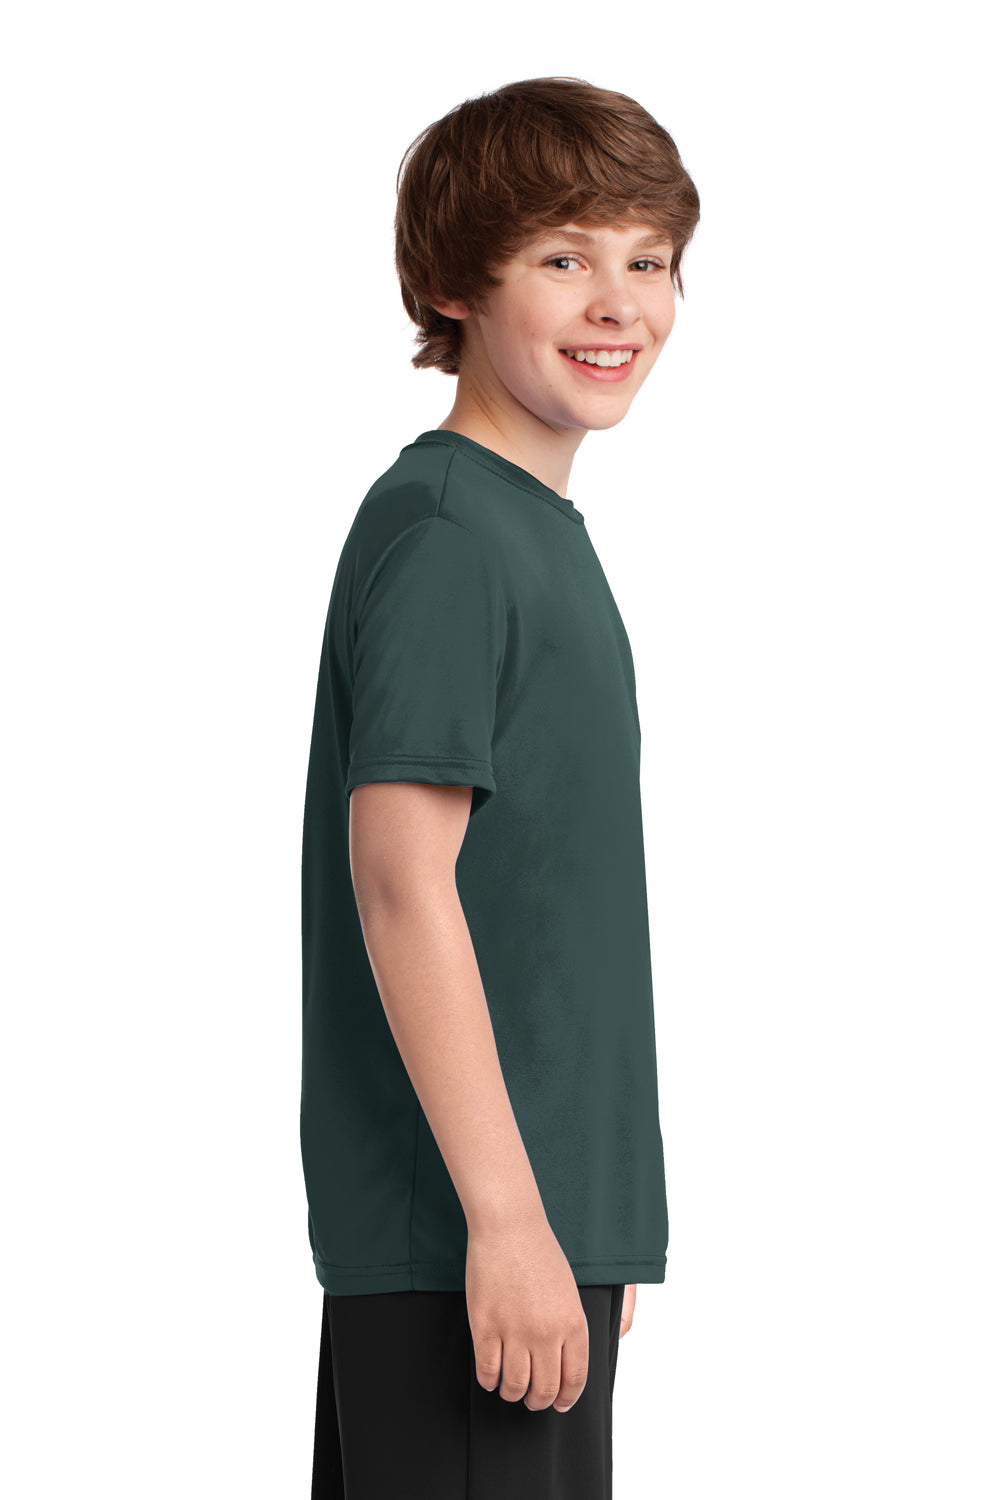 Port & Company PC380Y Youth Dry Zone Performance Moisture Wicking Short Sleeve Crewneck T-Shirt Dark Green Side